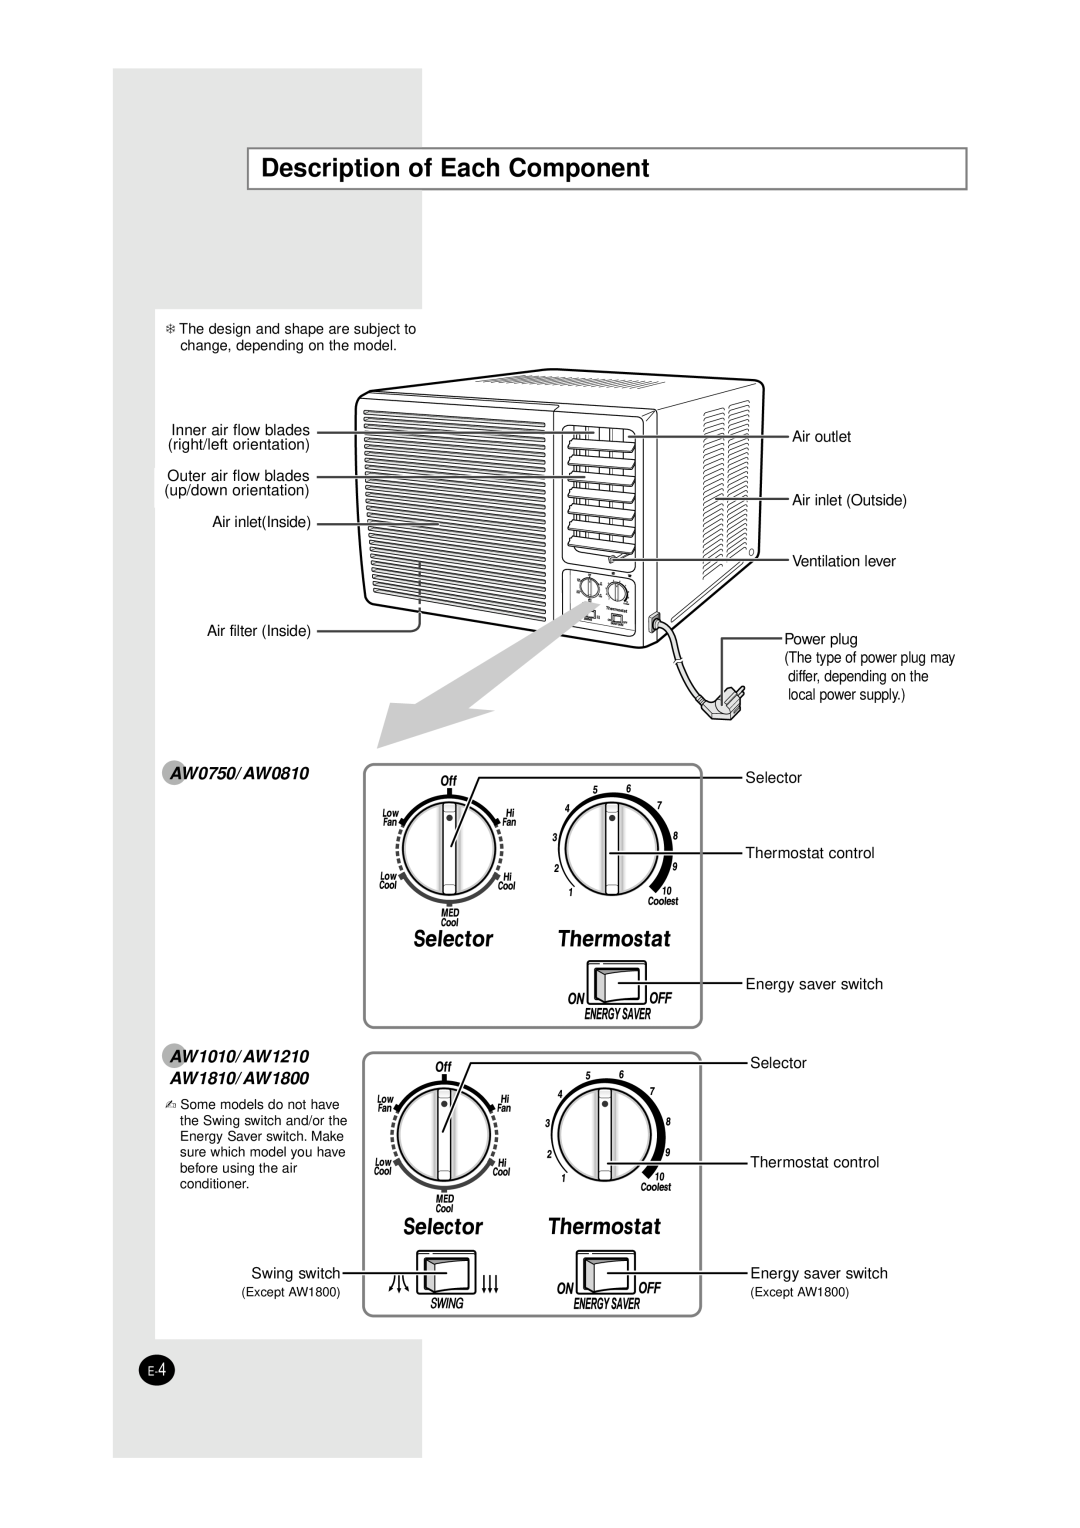 Samsung AW1800/AW1810 manual Description of Each Component, AW0750/AW0810 AW1010/AW1210 AW1810/AW1800 